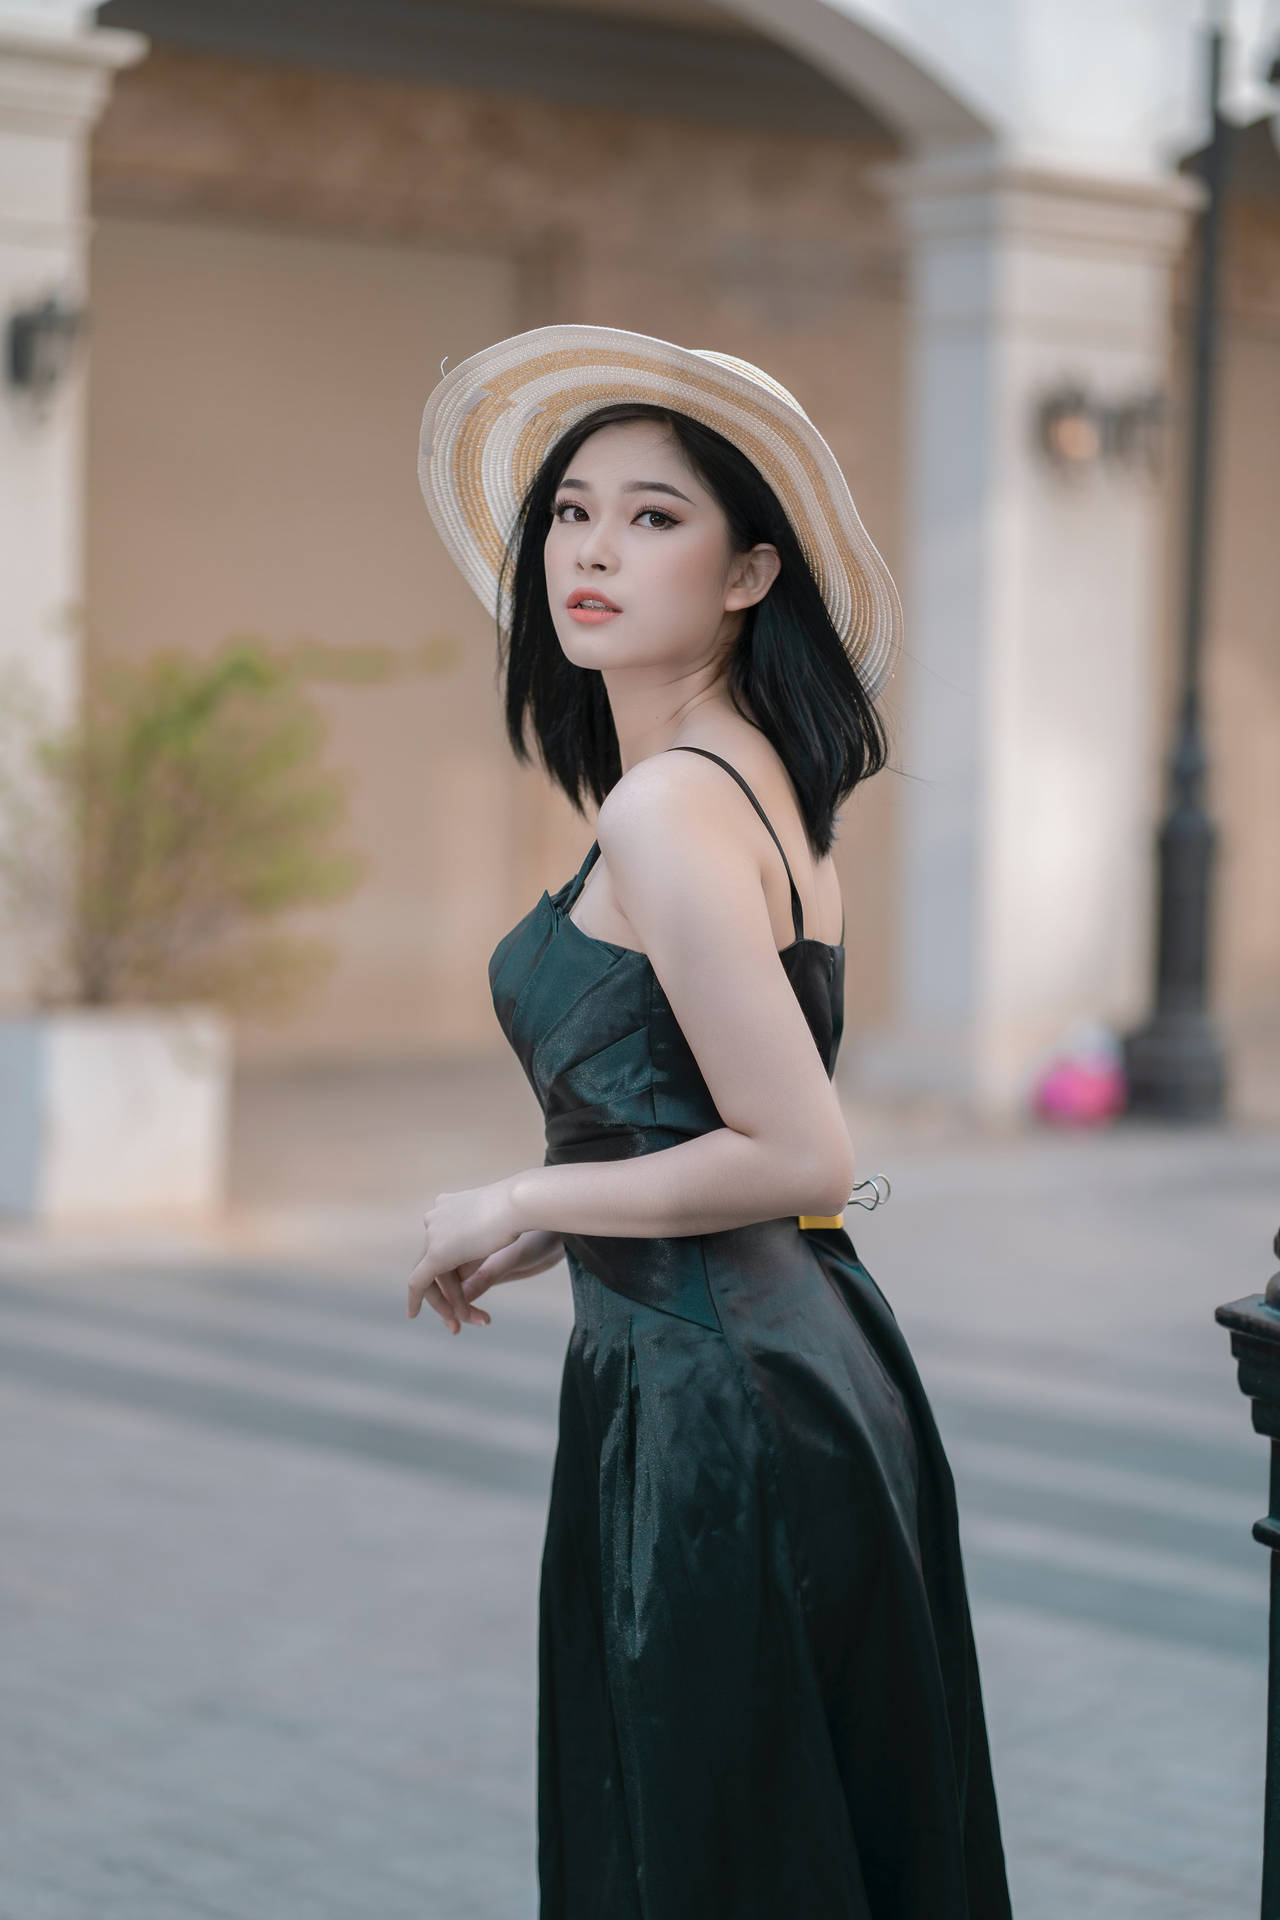 Asian Woman Wearing Elegant Green Dress